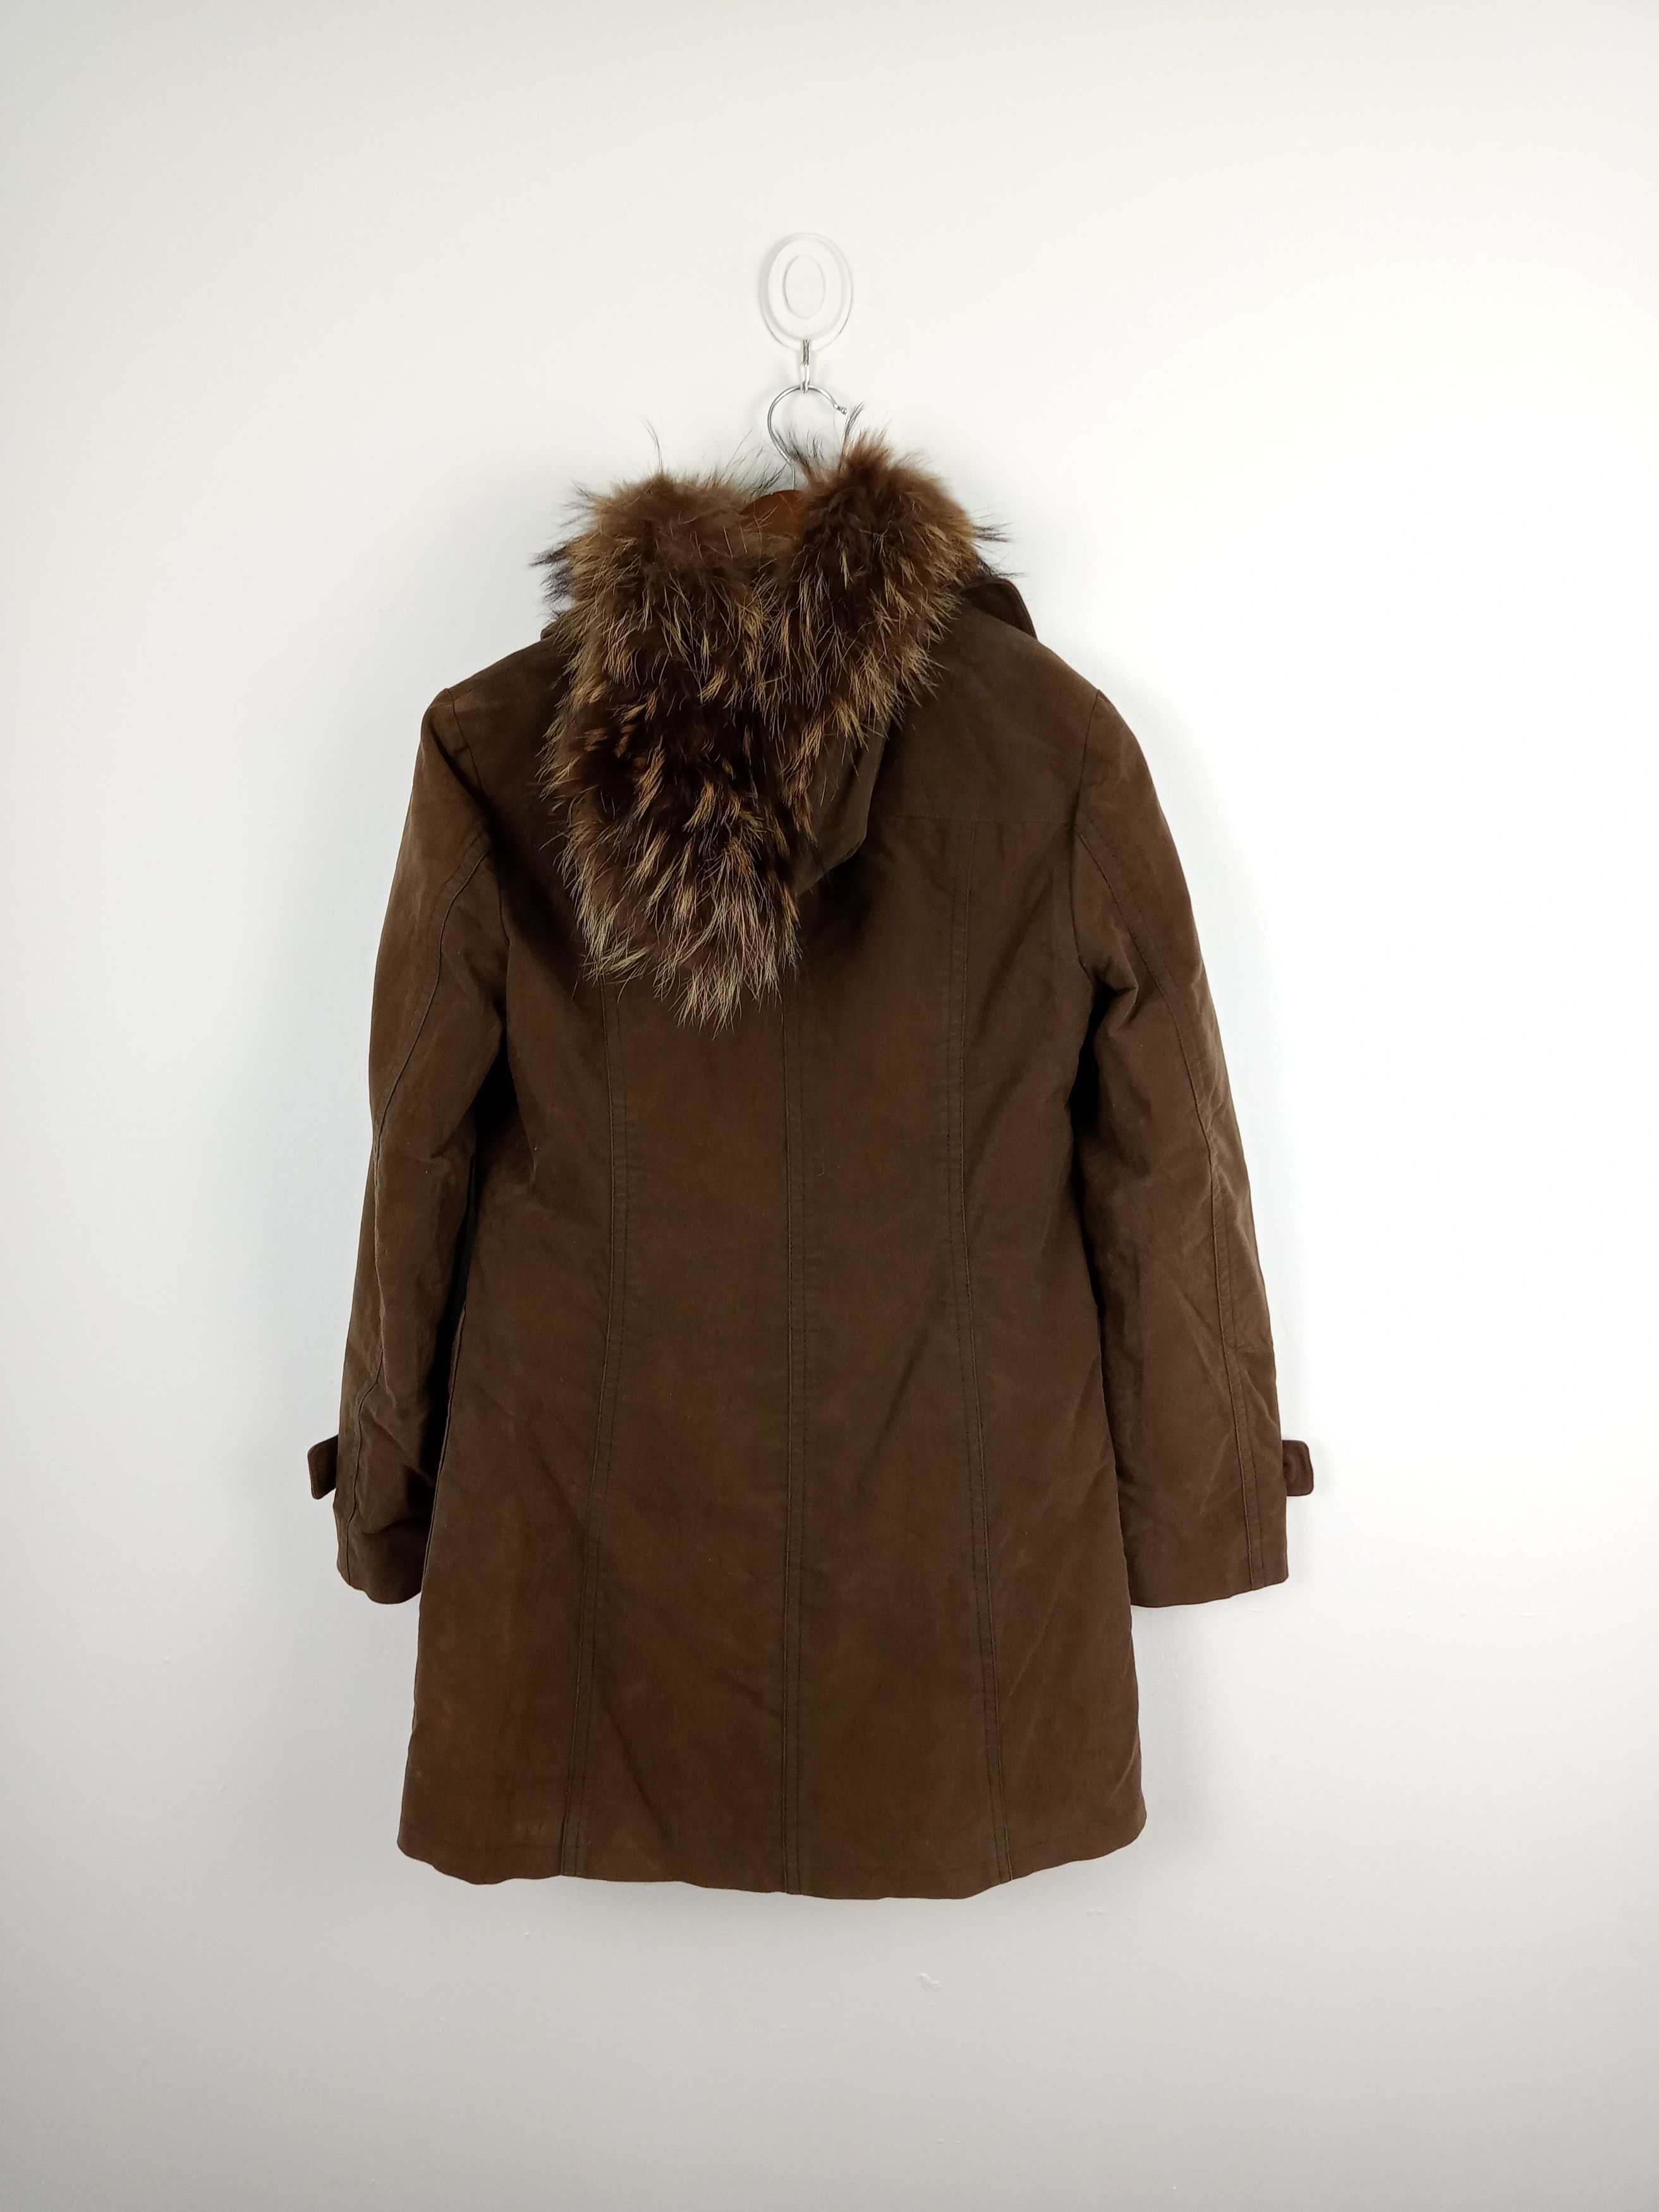 Designer Kumikyoku Vintage Design Hairy Hooded Jacket Size US S / EU 44-46 / 1 - 2 Preview